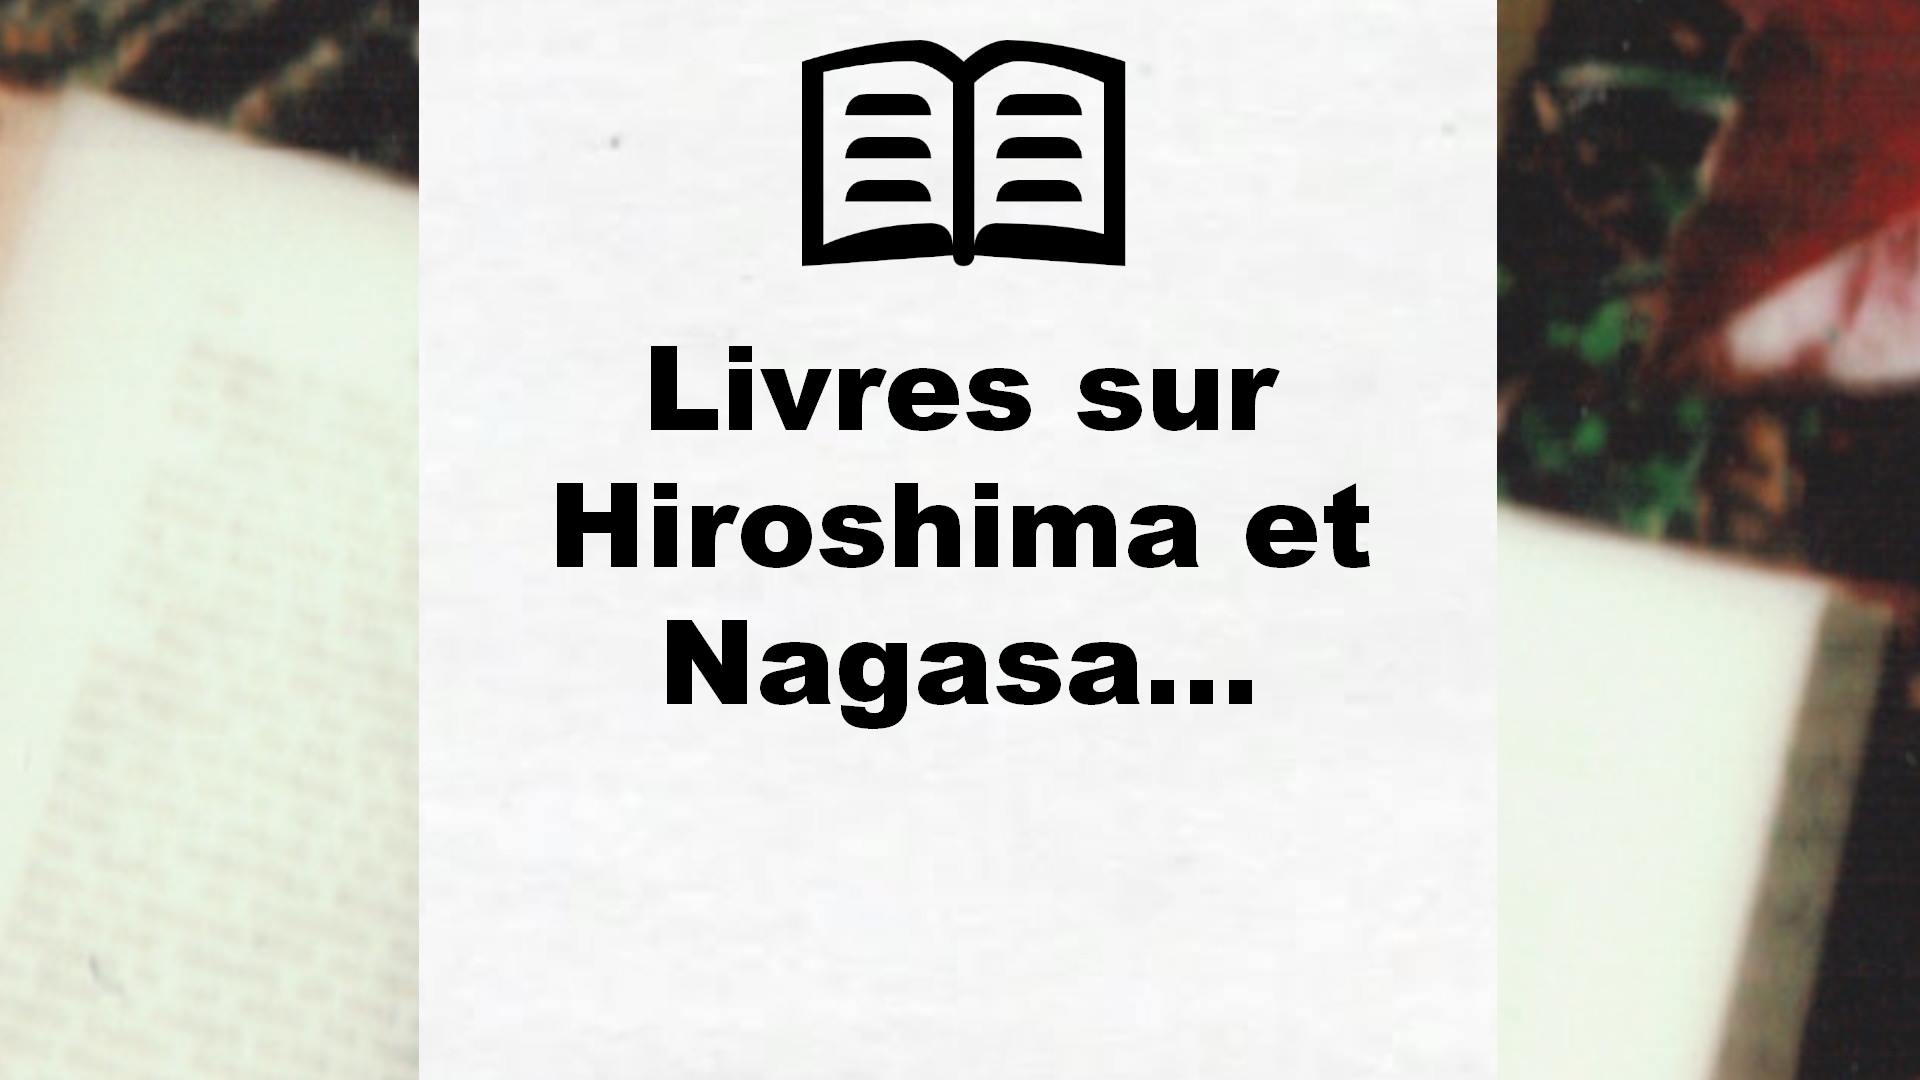 Livres sur Hiroshima et Nagasaki